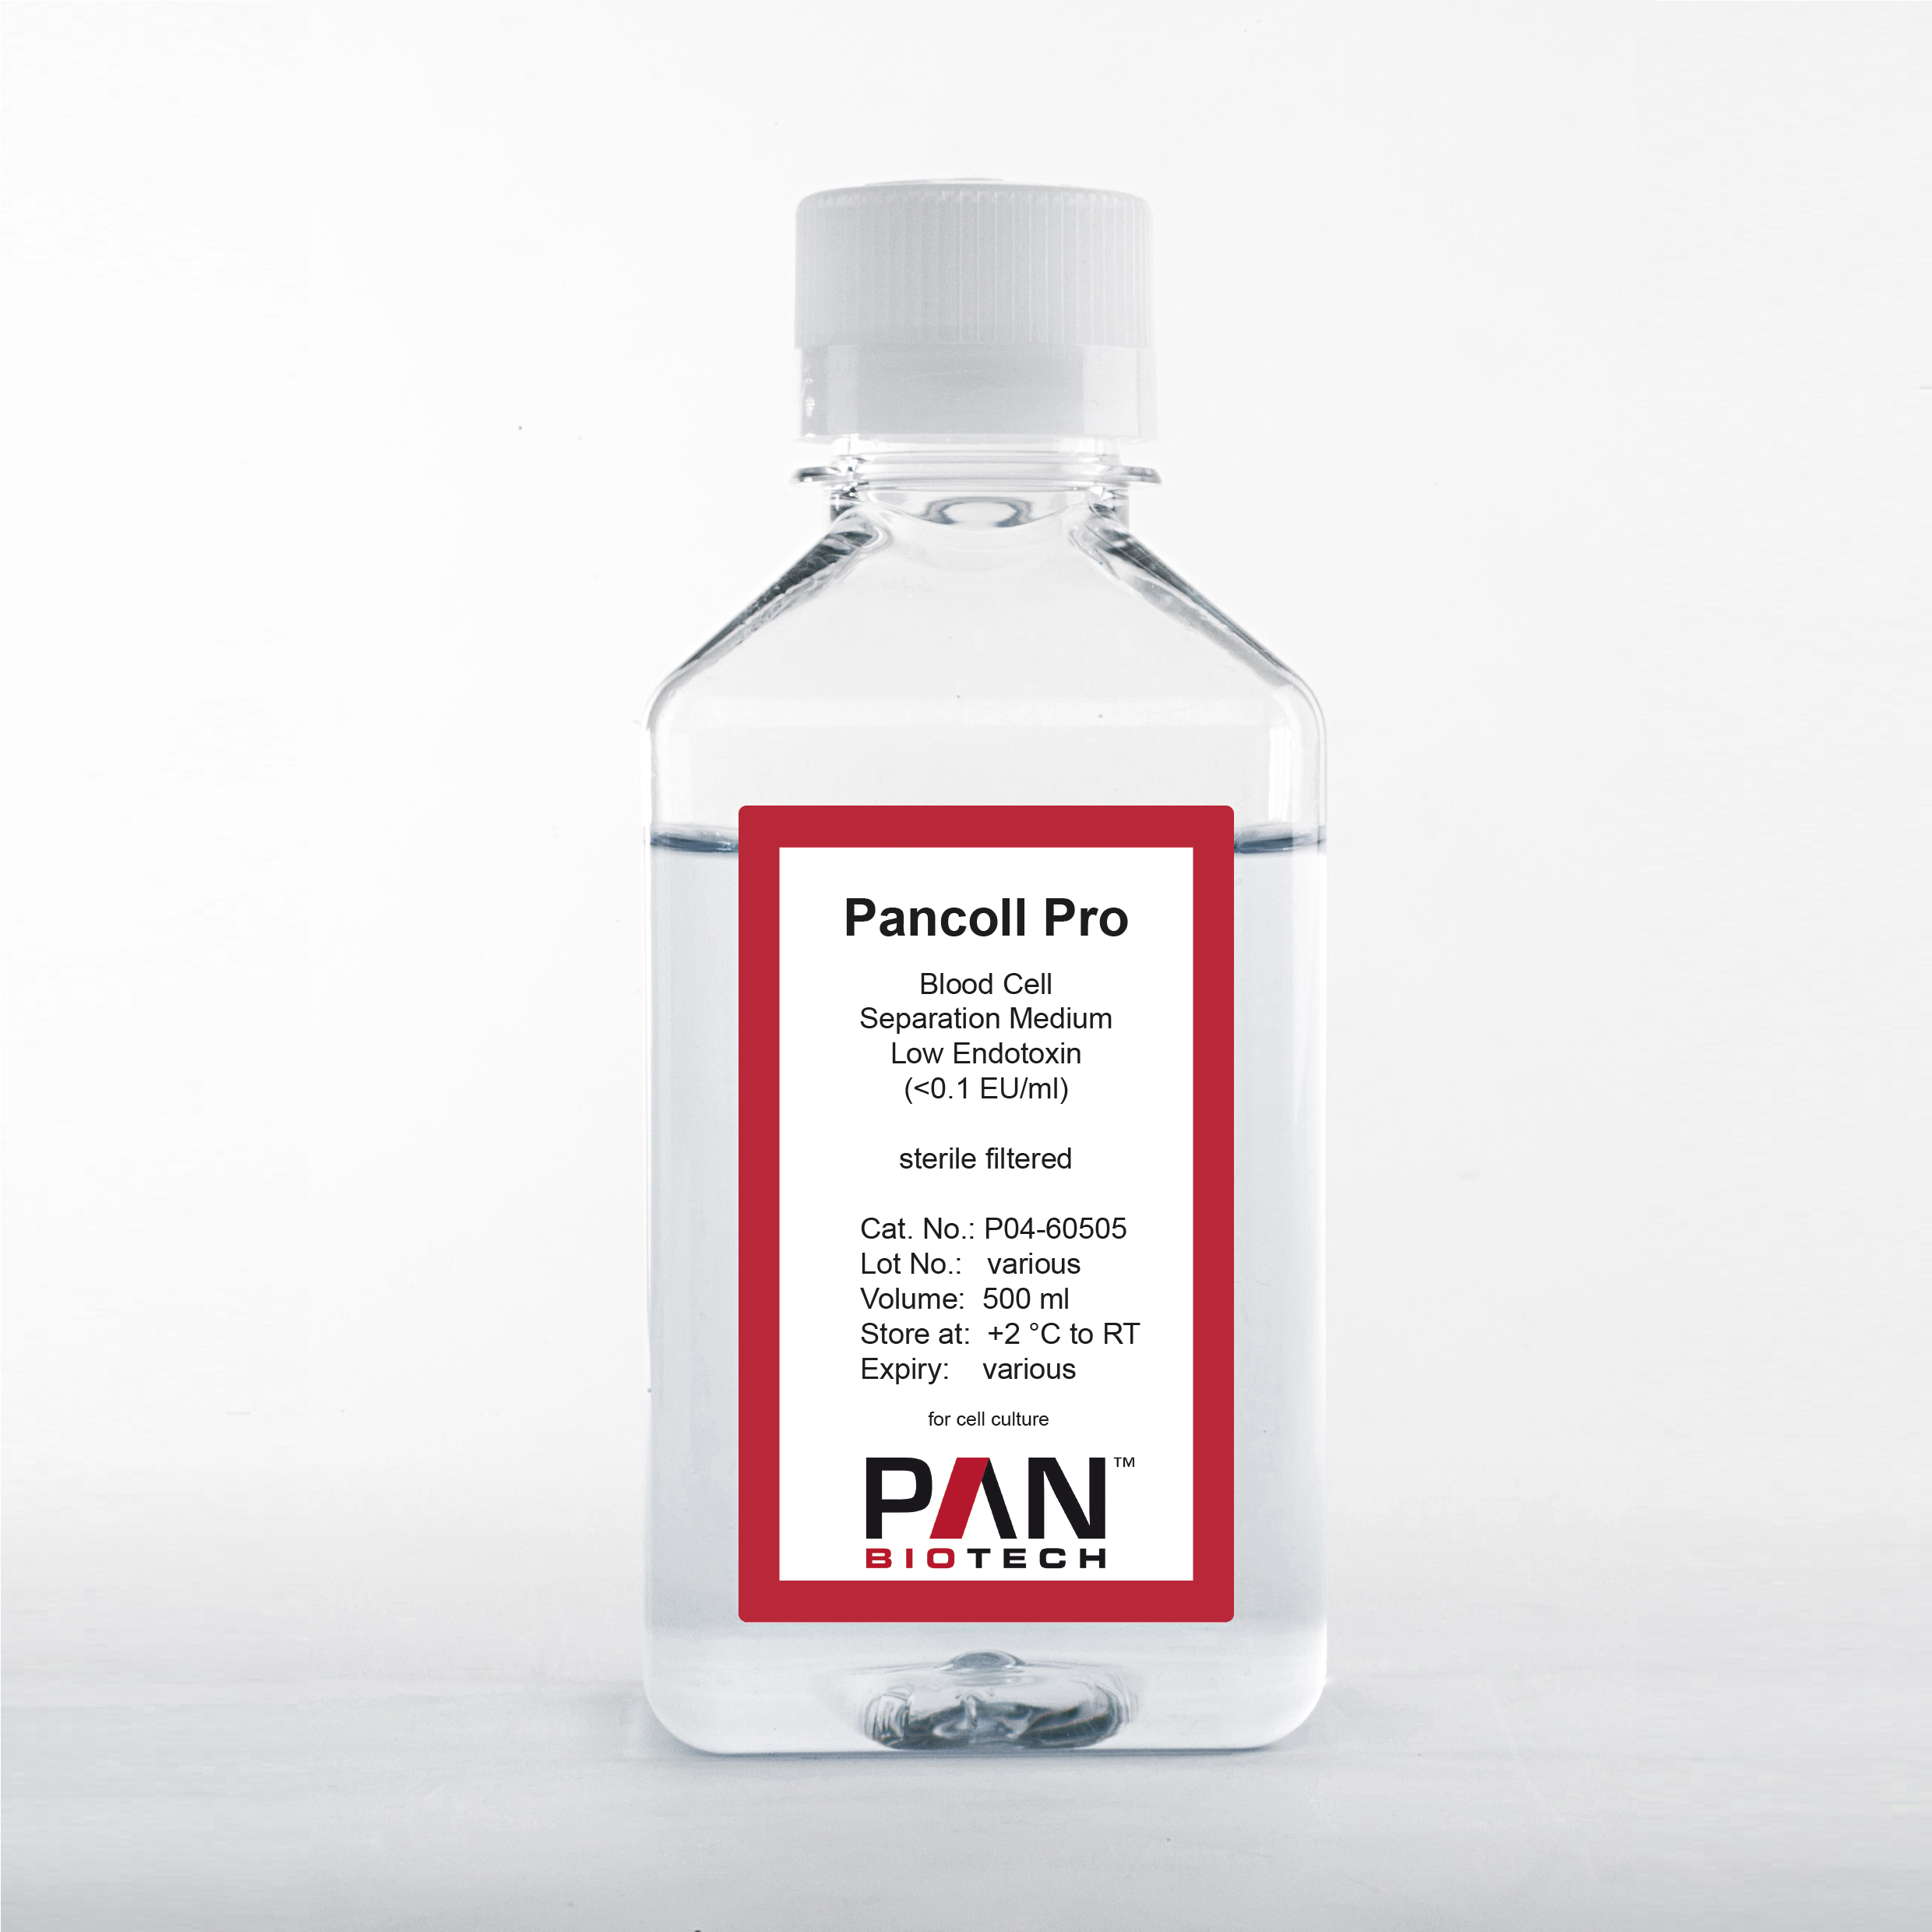 Pancoll Pro, Blood Cell Separation Medium, Low Endotoxin (